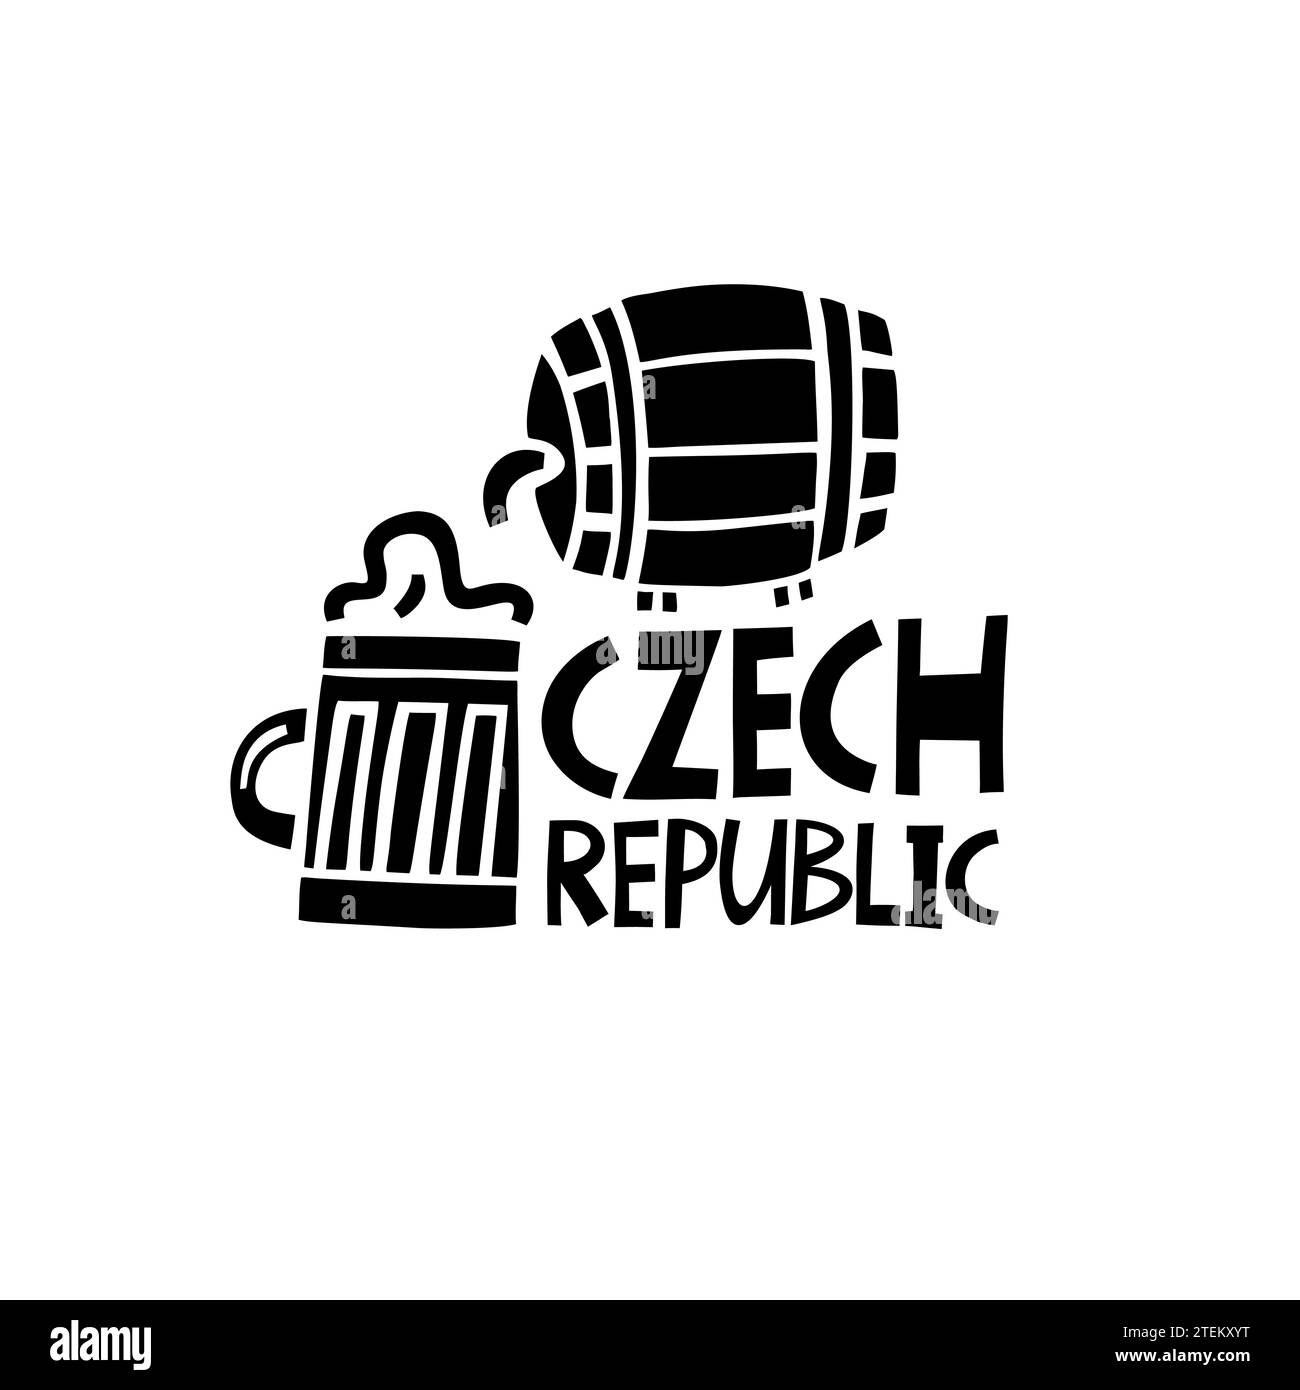 Vector Hand Drawn Czech Republic Label. Travel Europe Illustration. Hand Written Lettering Illustration. Czech Symbol Logo Stock Vector